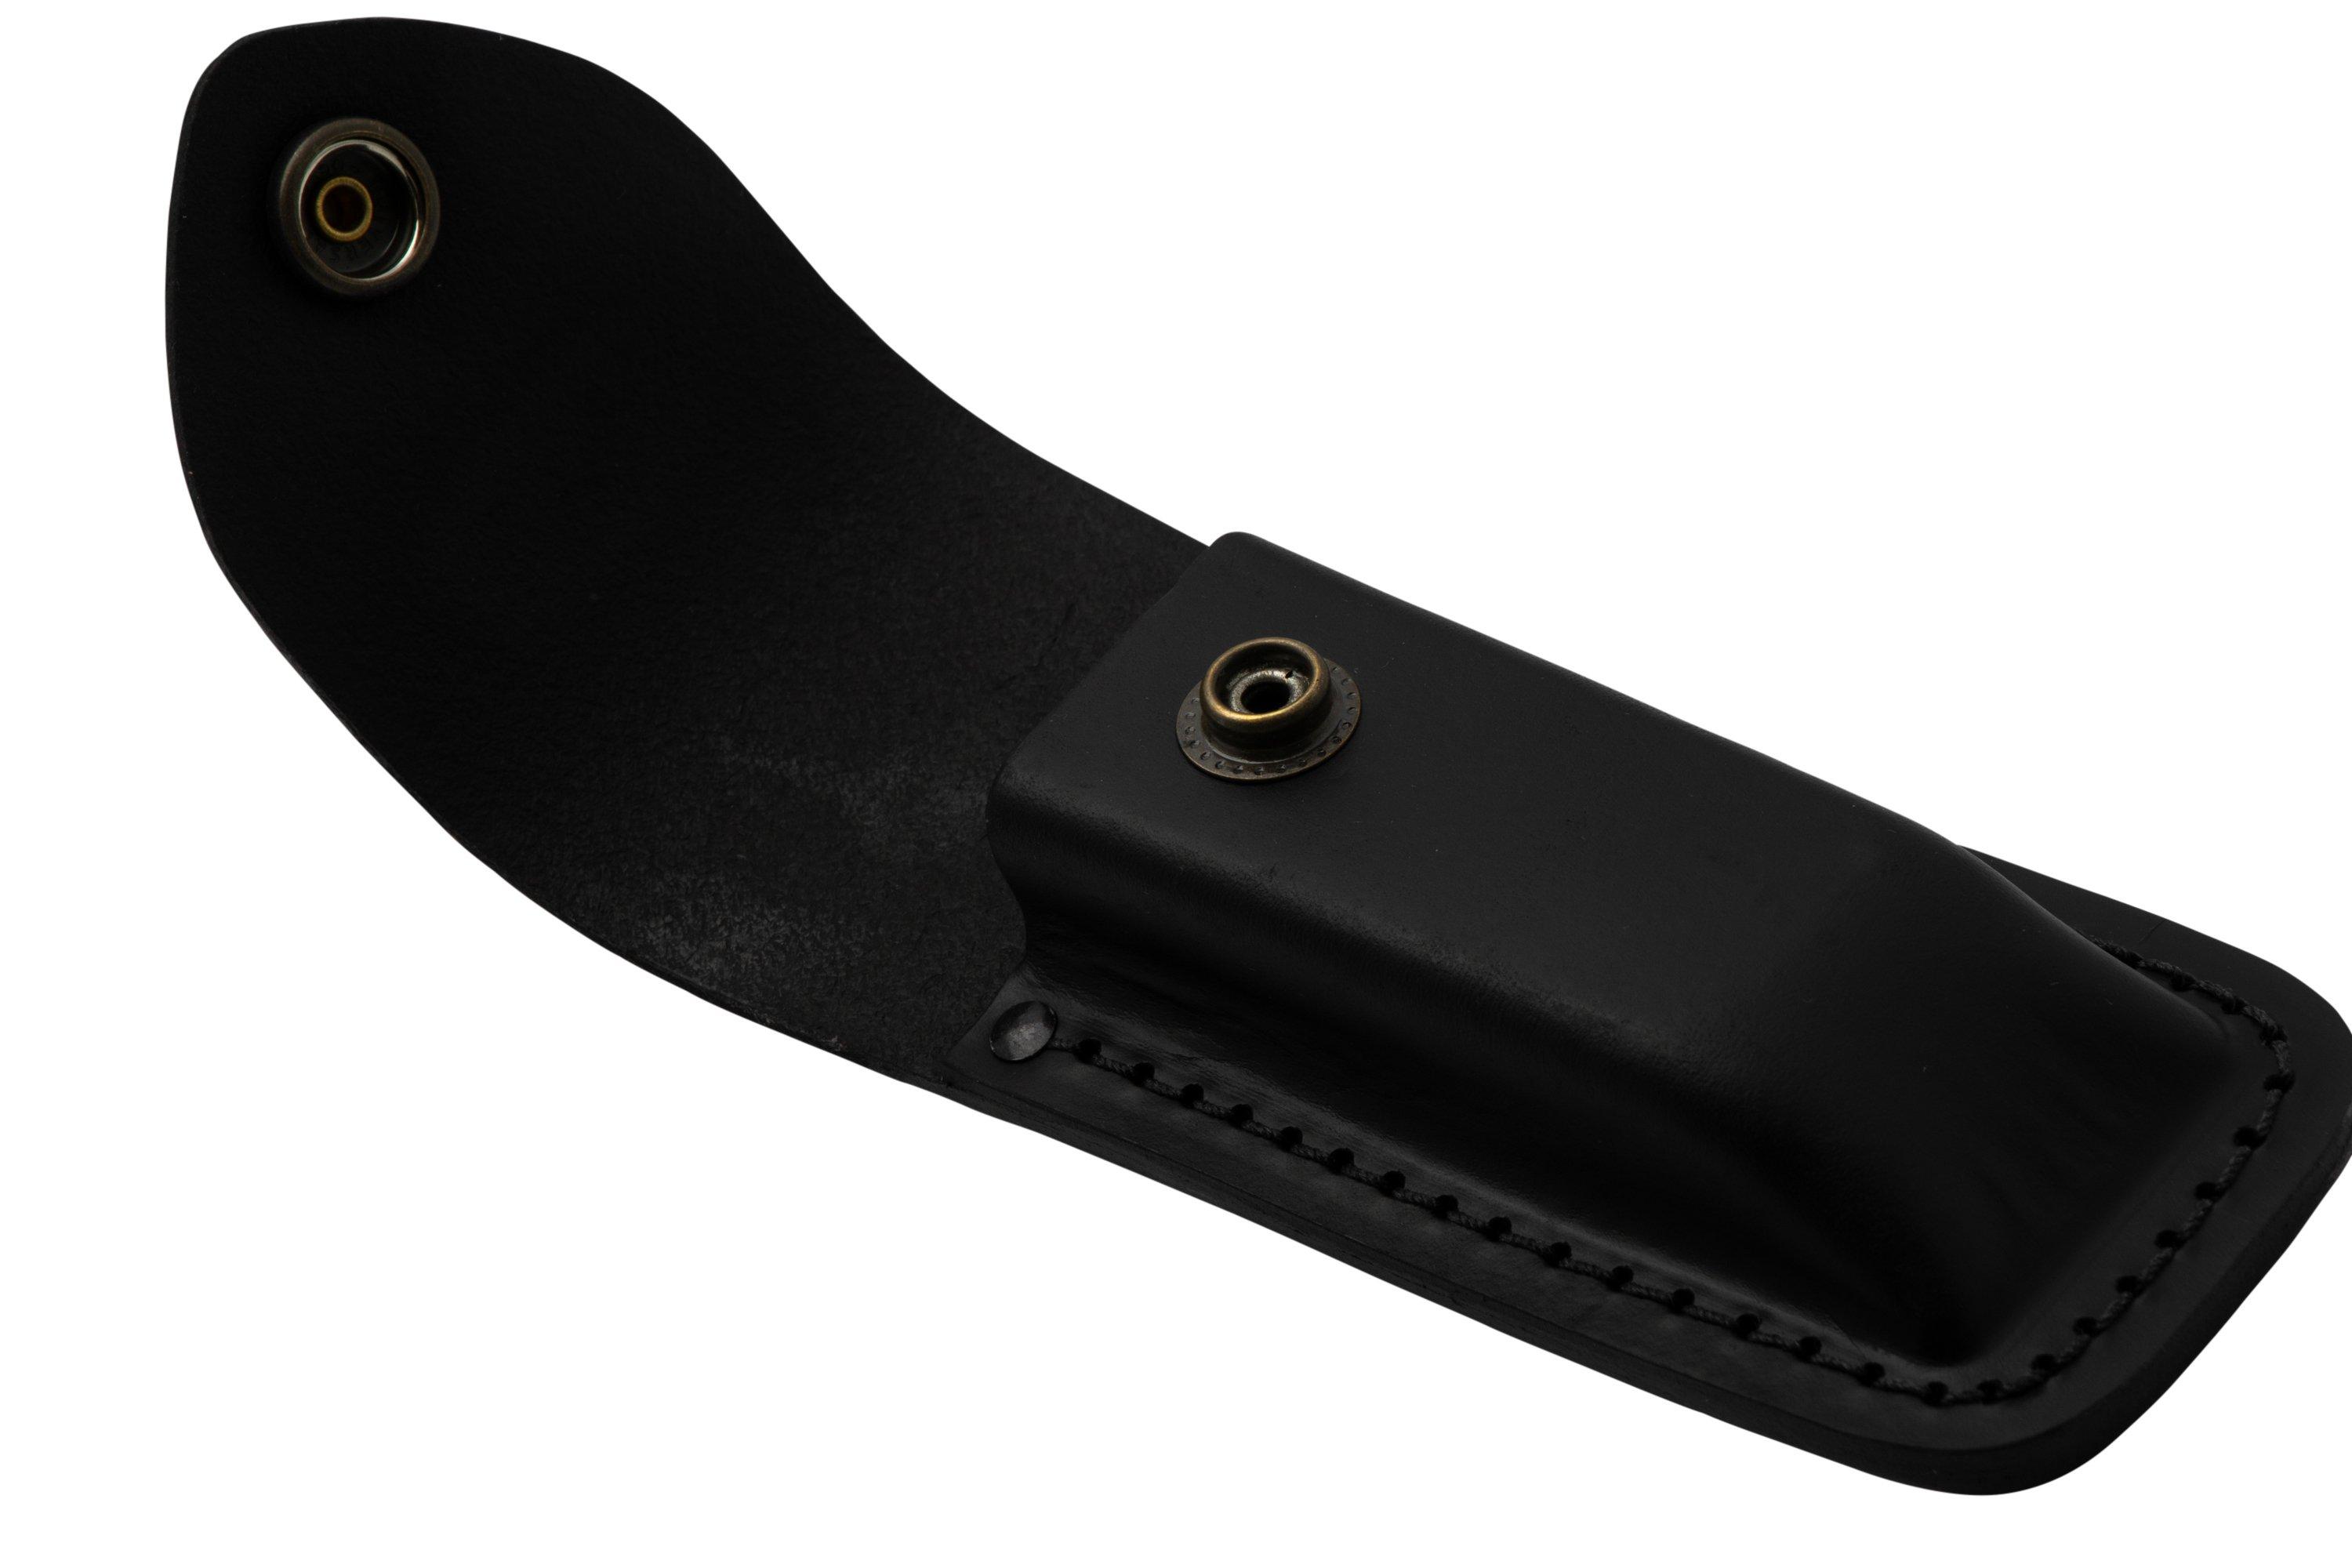 Clip & Carry Sheath for Buck 110/112 Knife - Carbon Fiber Black